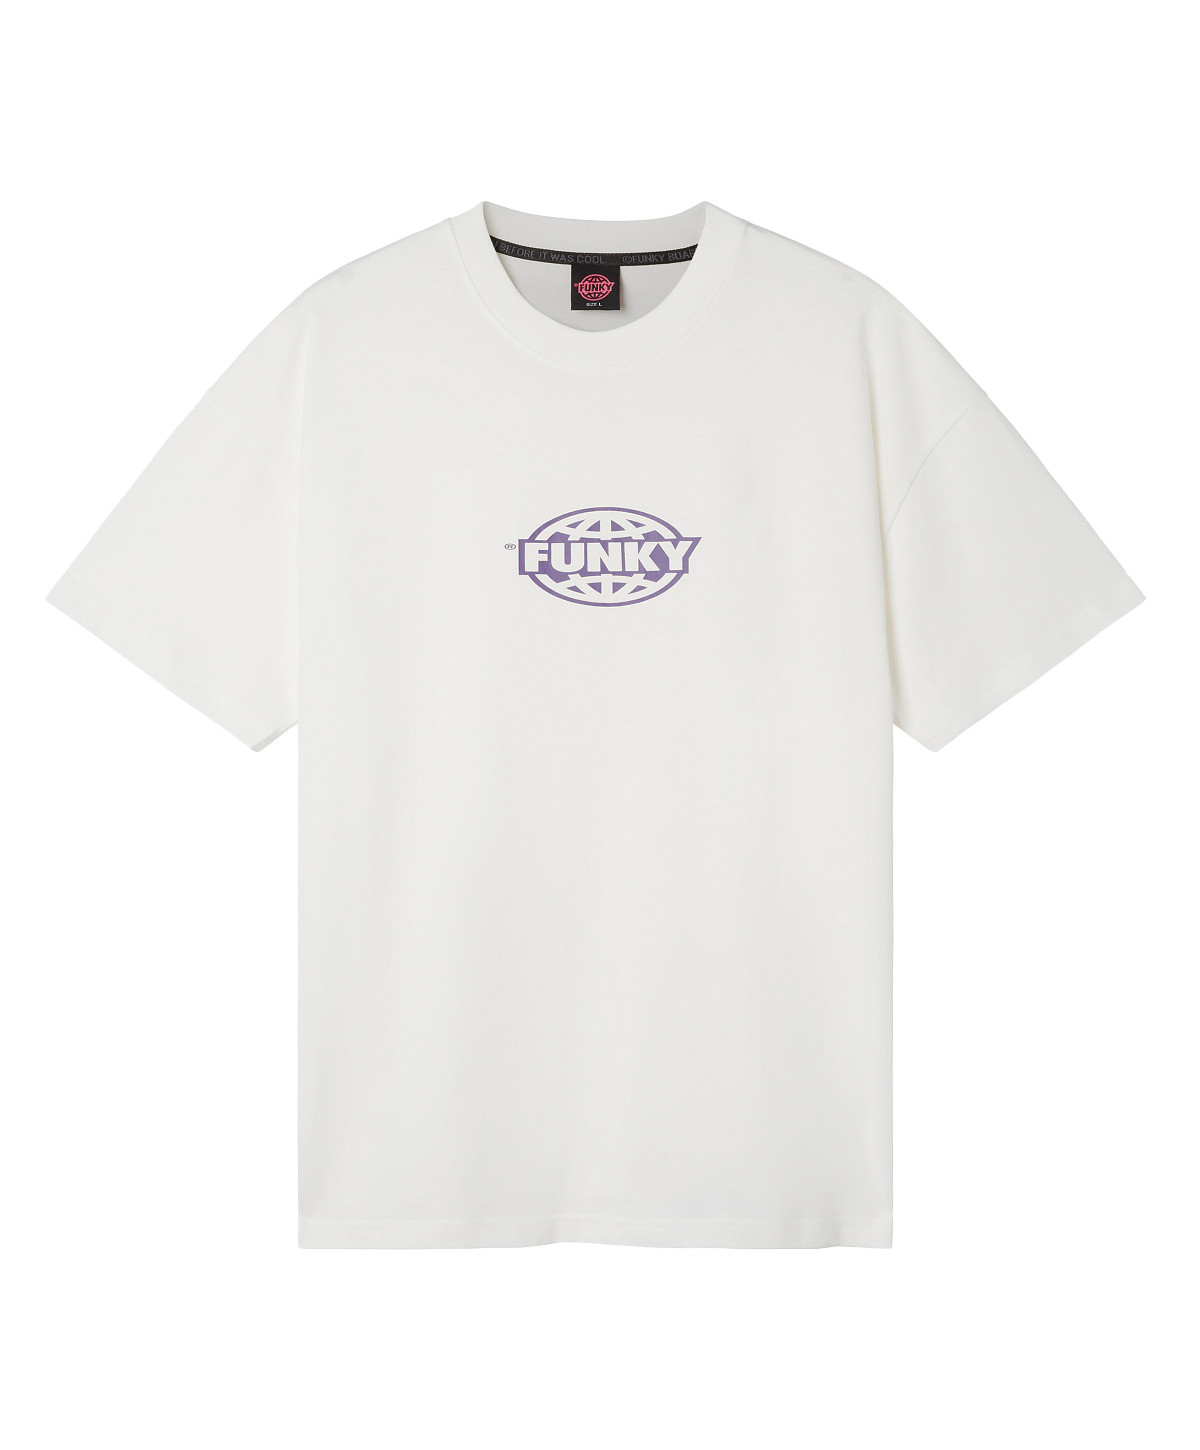 Funky - T-shirt girocollo con logo ovale, Bianco, large image number 0